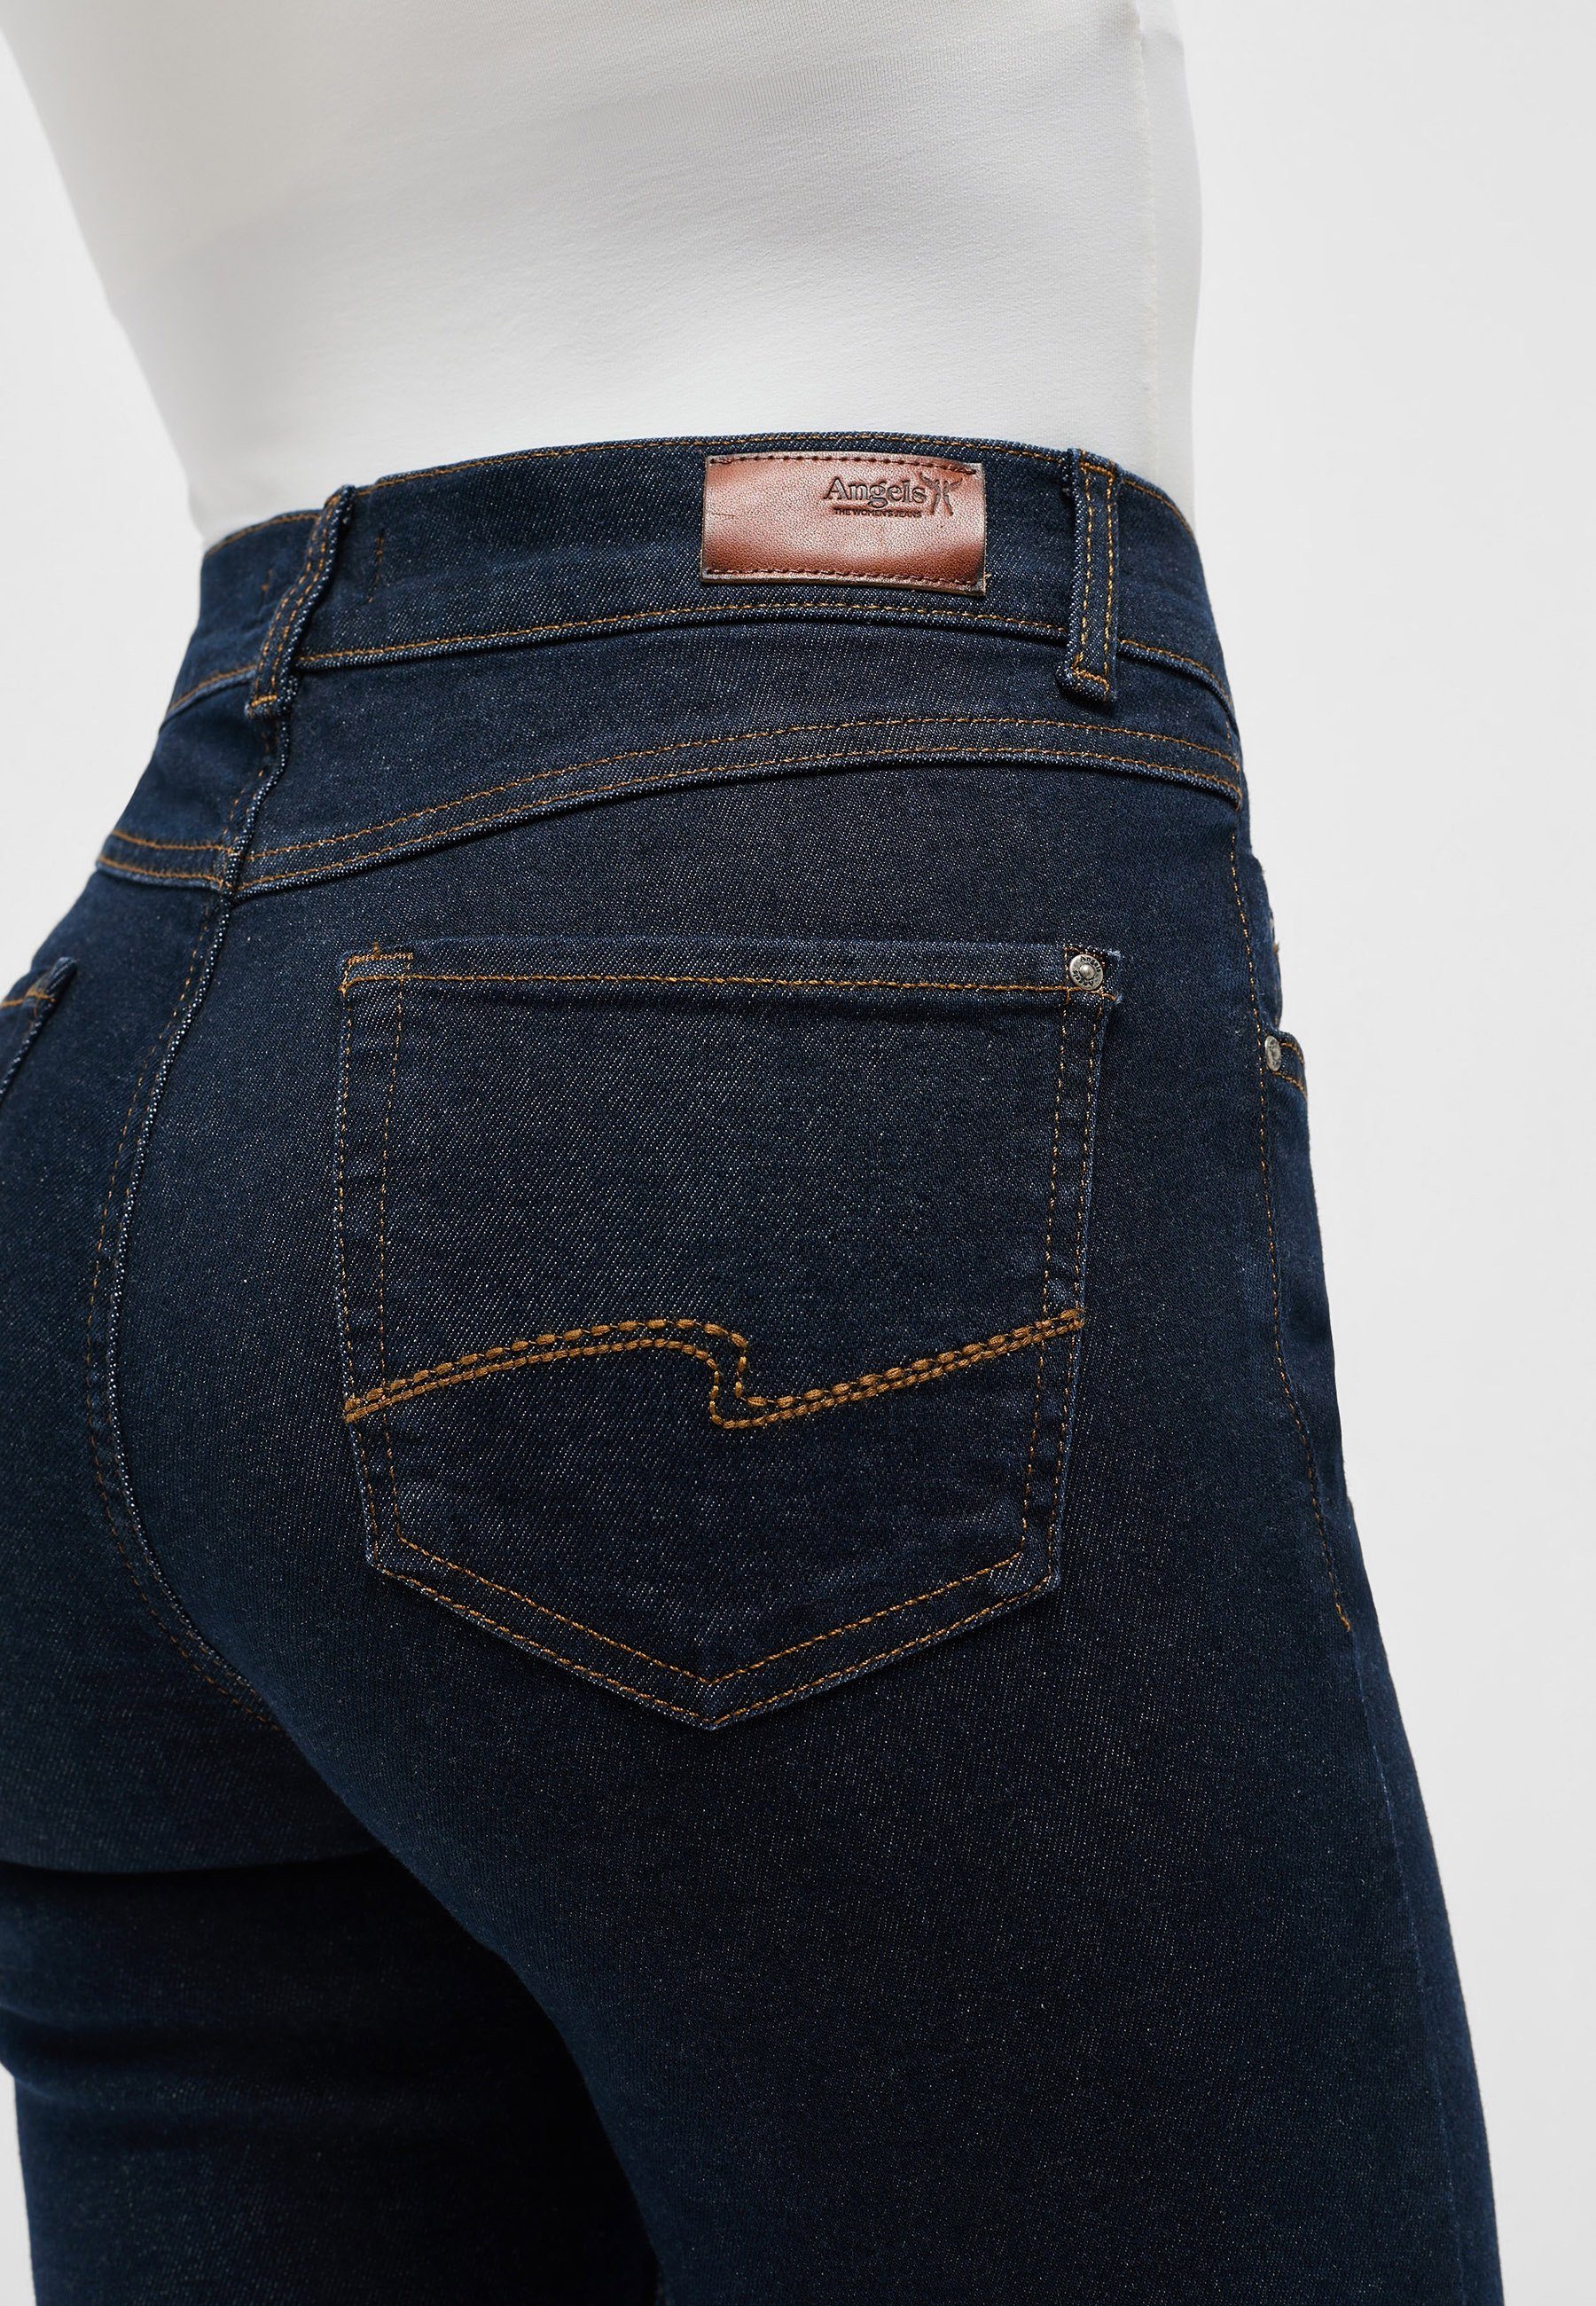 ANGELS Straight-Jeans Jeans mit Cici mit Label-Applikationen Used-Waschung dunkelblau